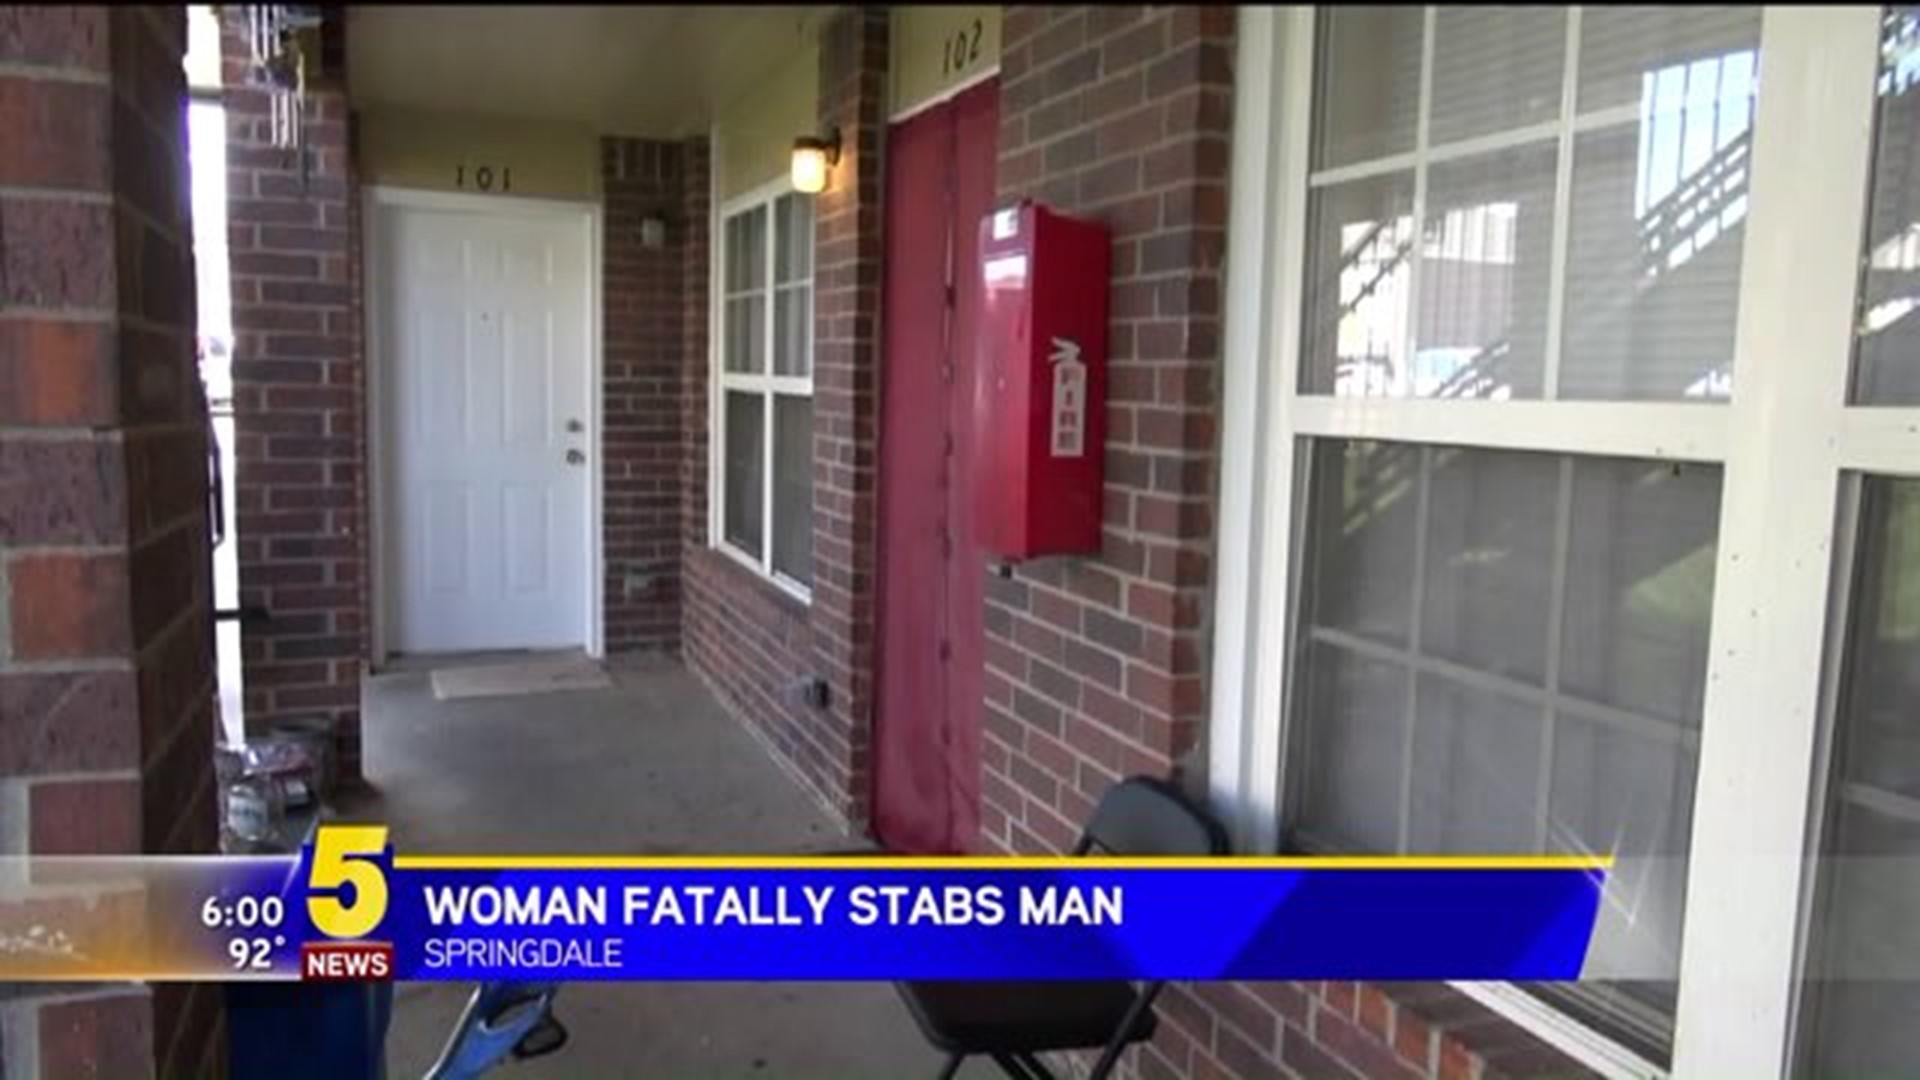 Springdale Woman Fatally Stabs Man